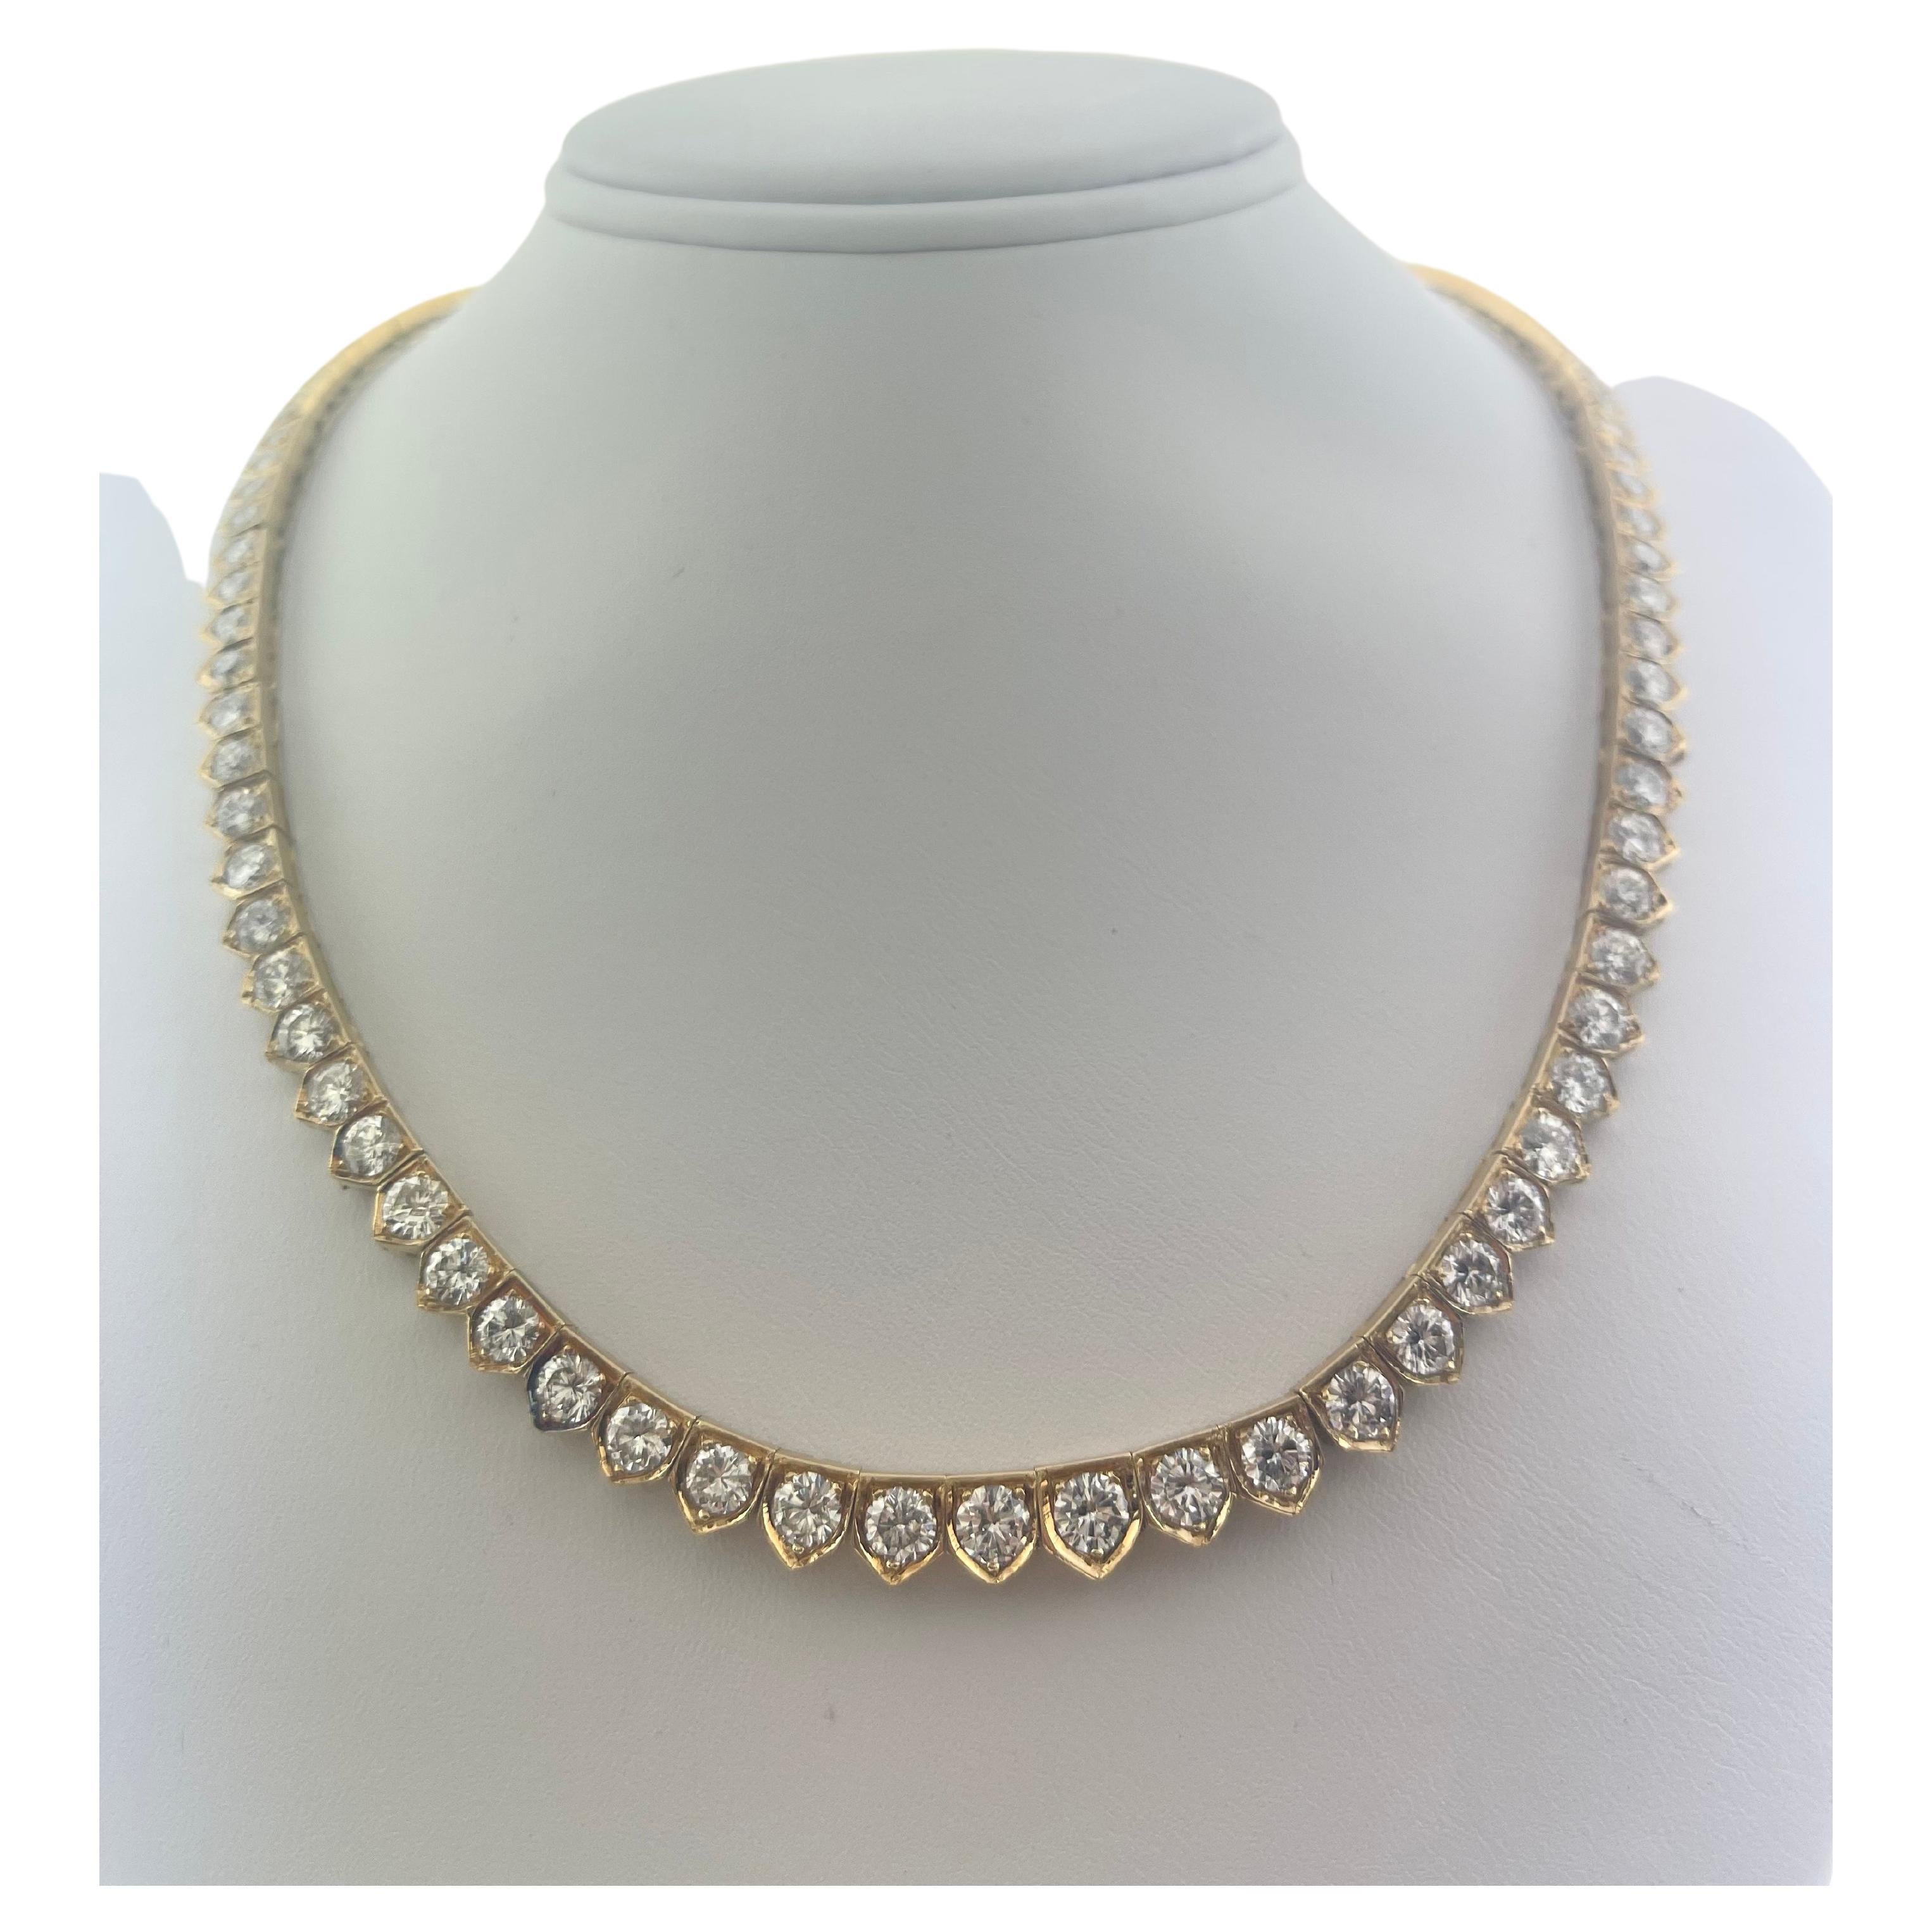 Approximately 10 Carat Total Weight Bezel Set Diamond Necklace